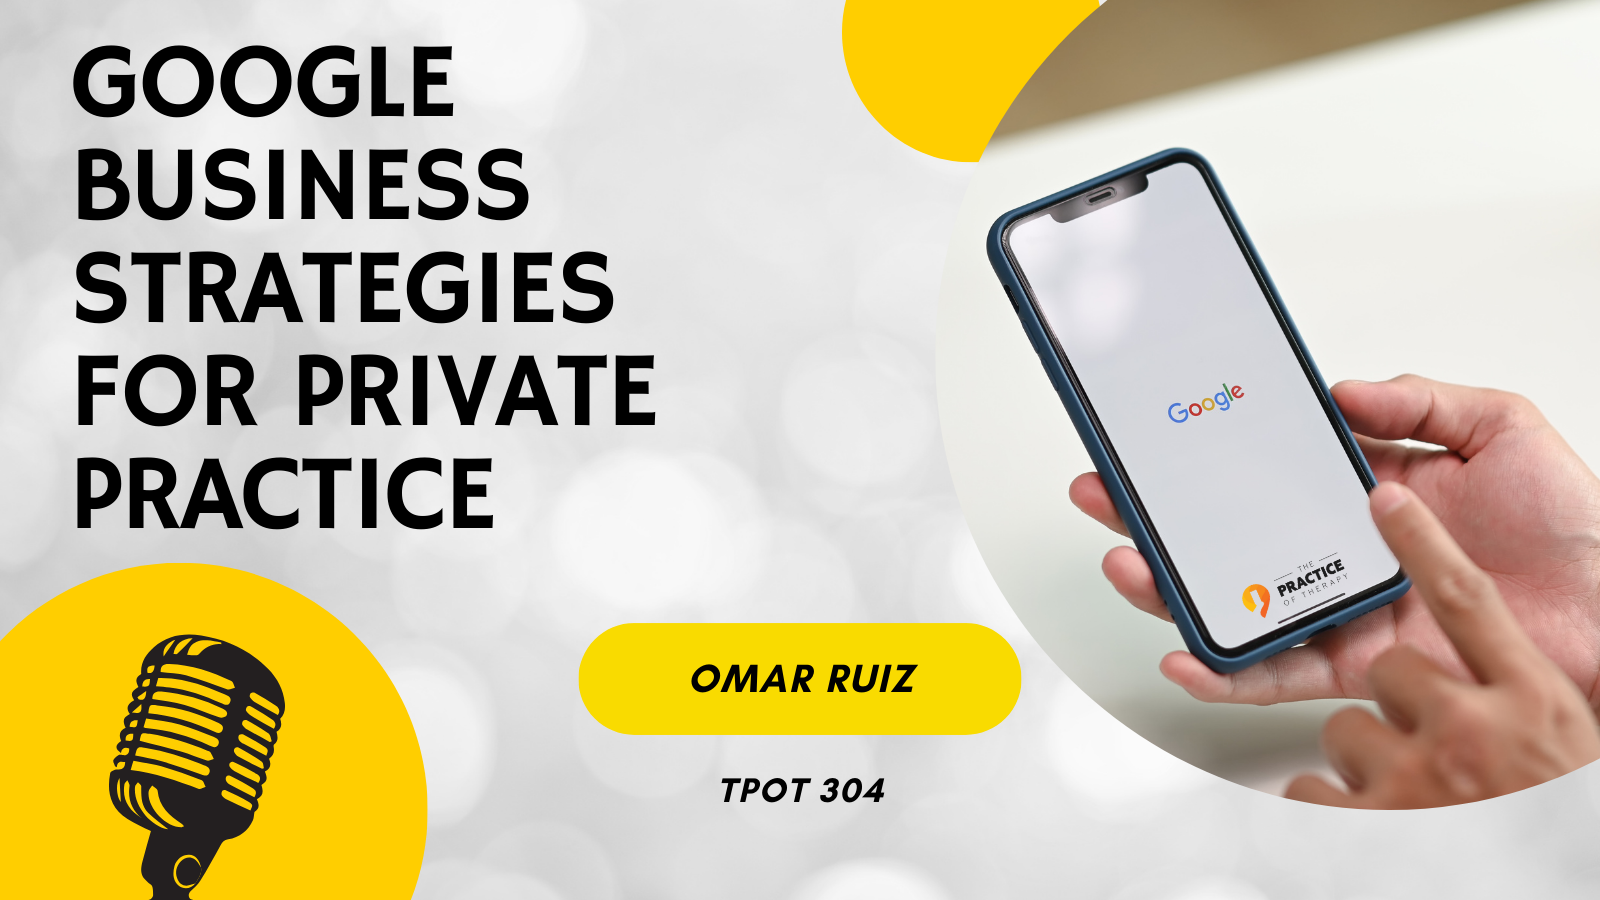 Omar Ruiz | Google Business Strategies for Private Practice | TPOT 304